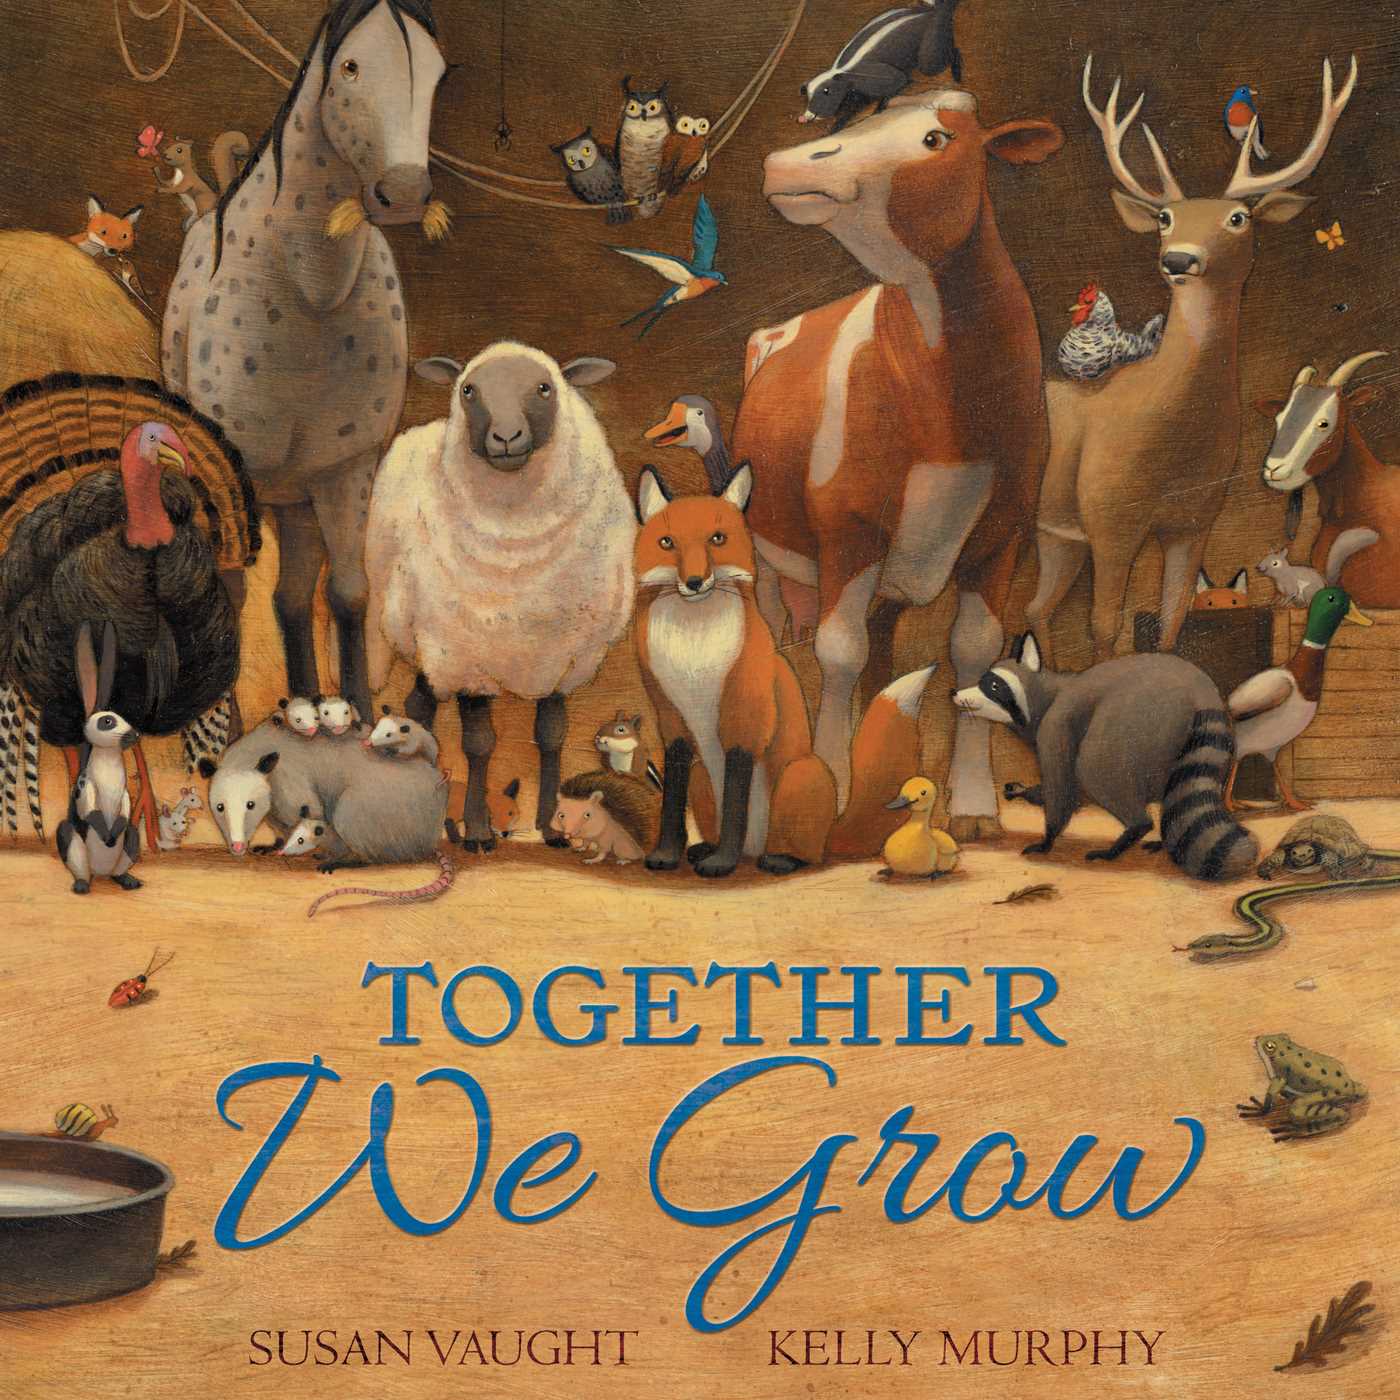 Image of "Together We Grow"